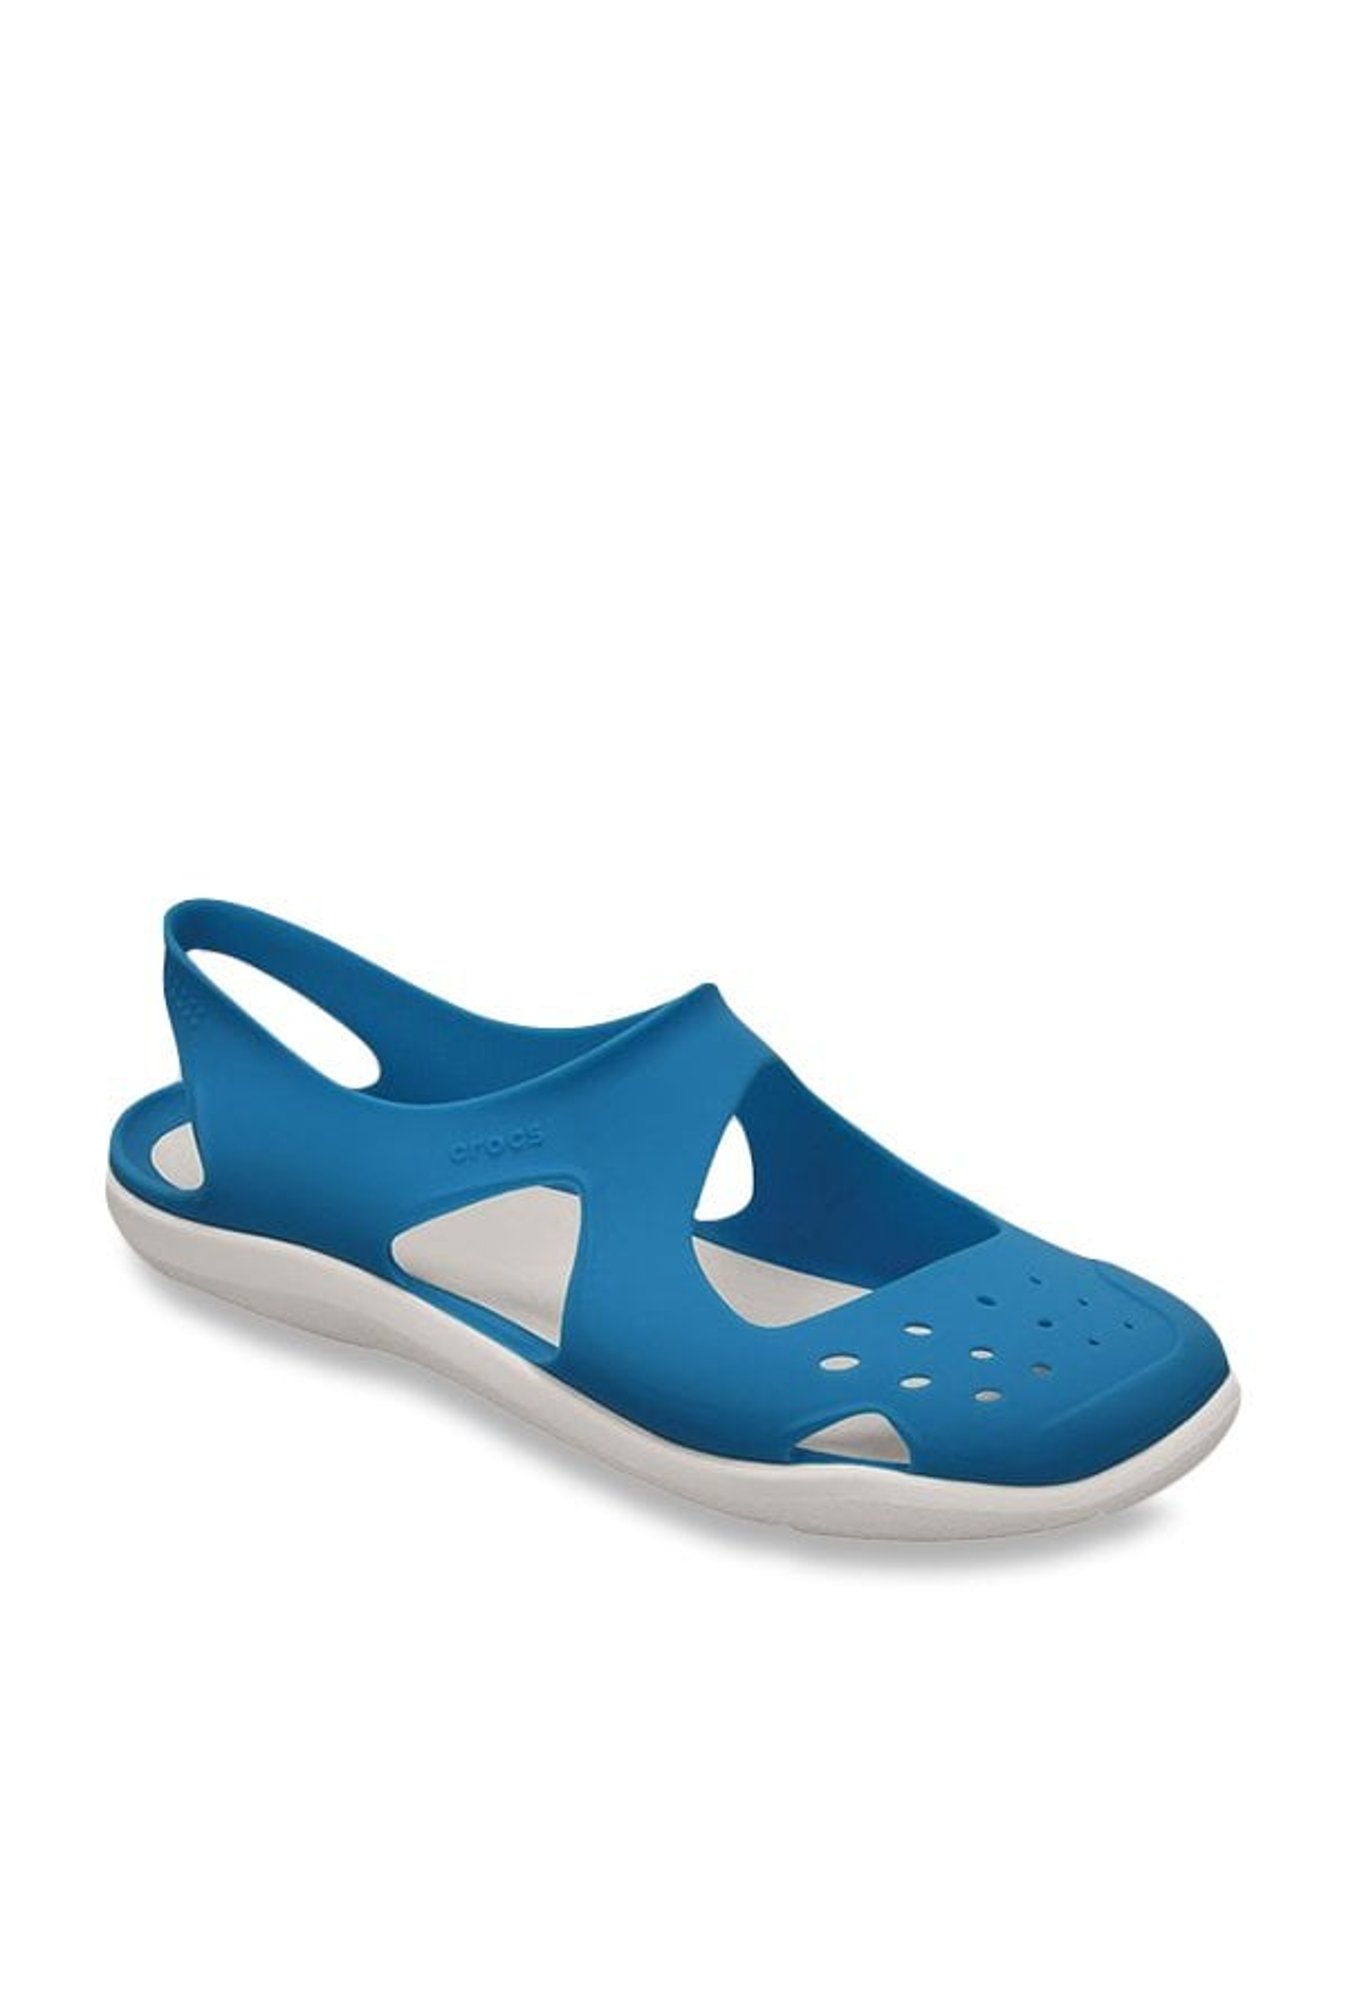 crocs women's swiftwater wave sandal